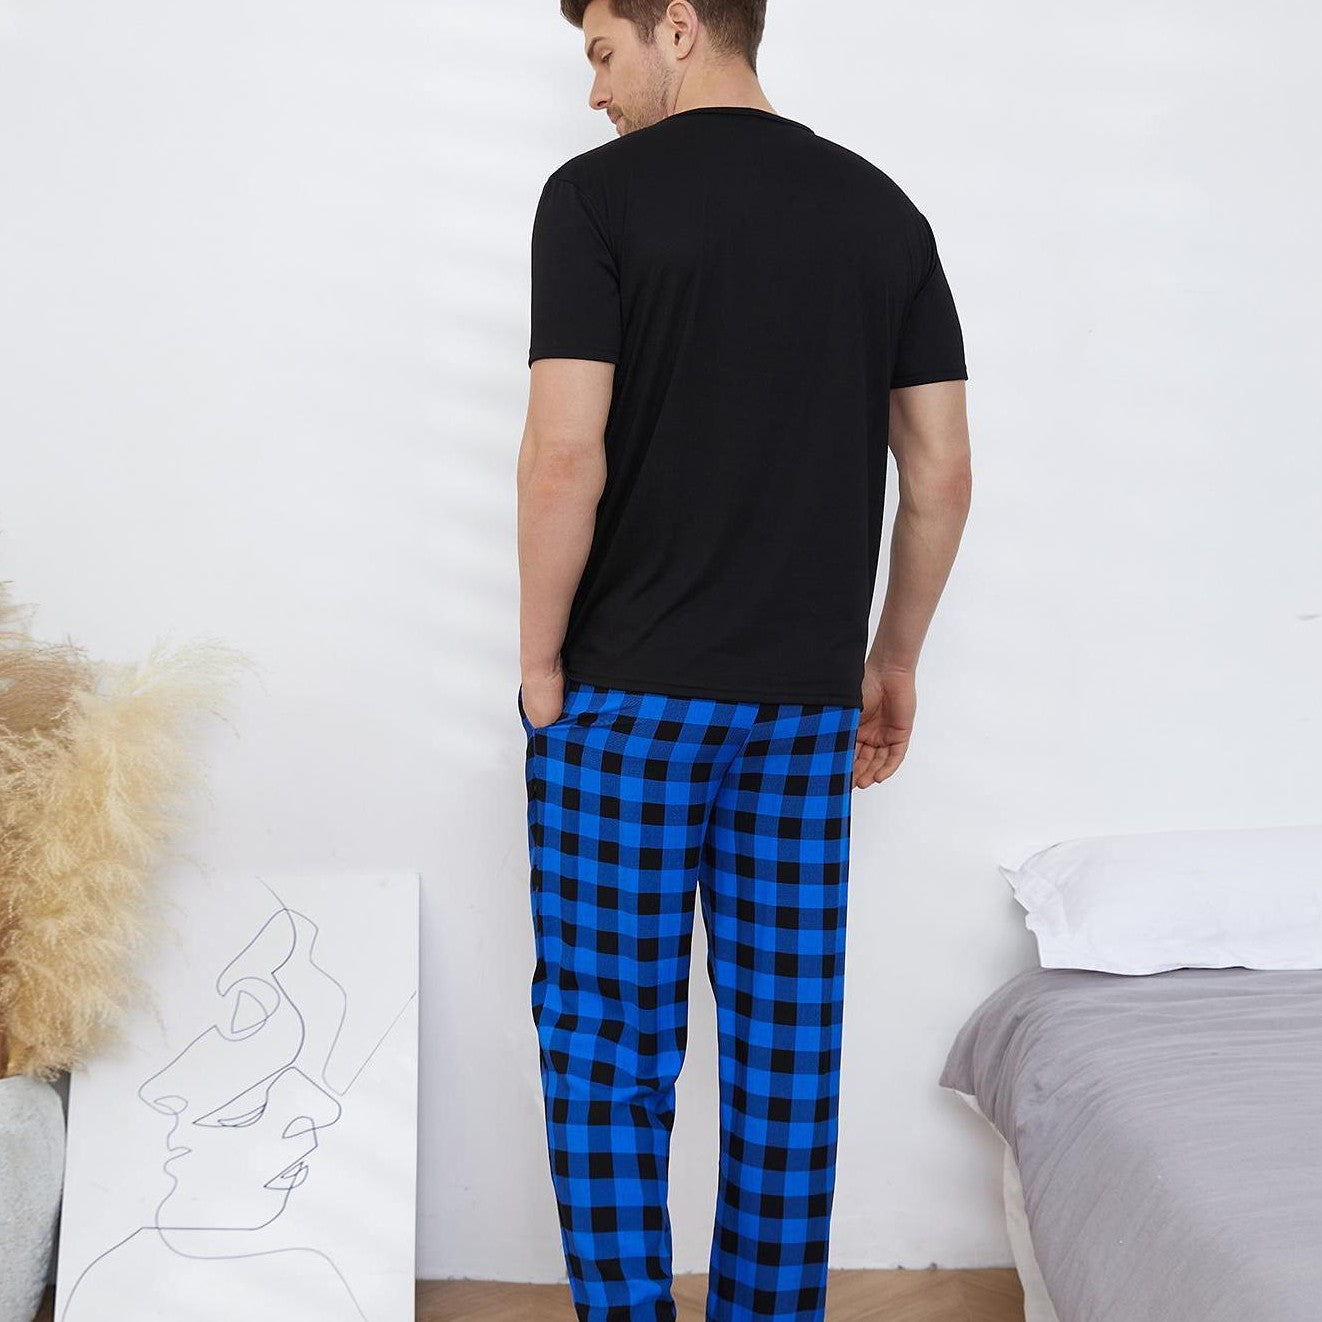 Men's Pajamas Set Short-sleeved Long Pants Home Wear